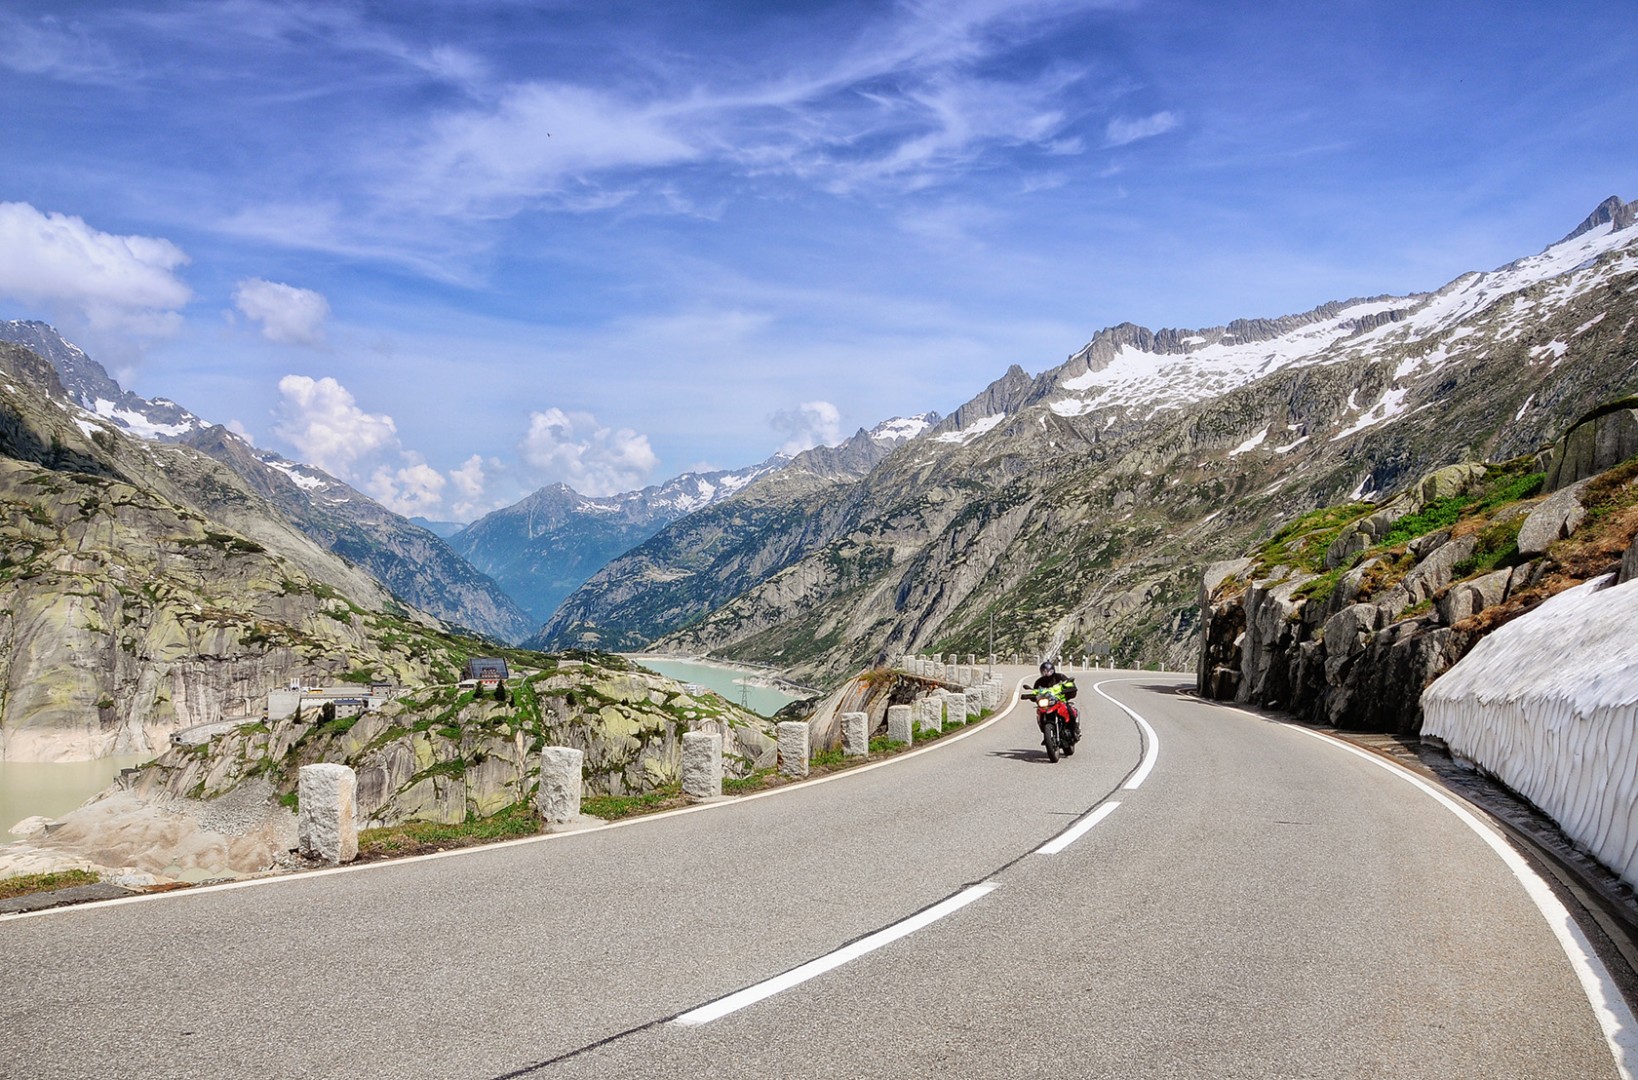 Ruta En Moto Cima de los Alpes